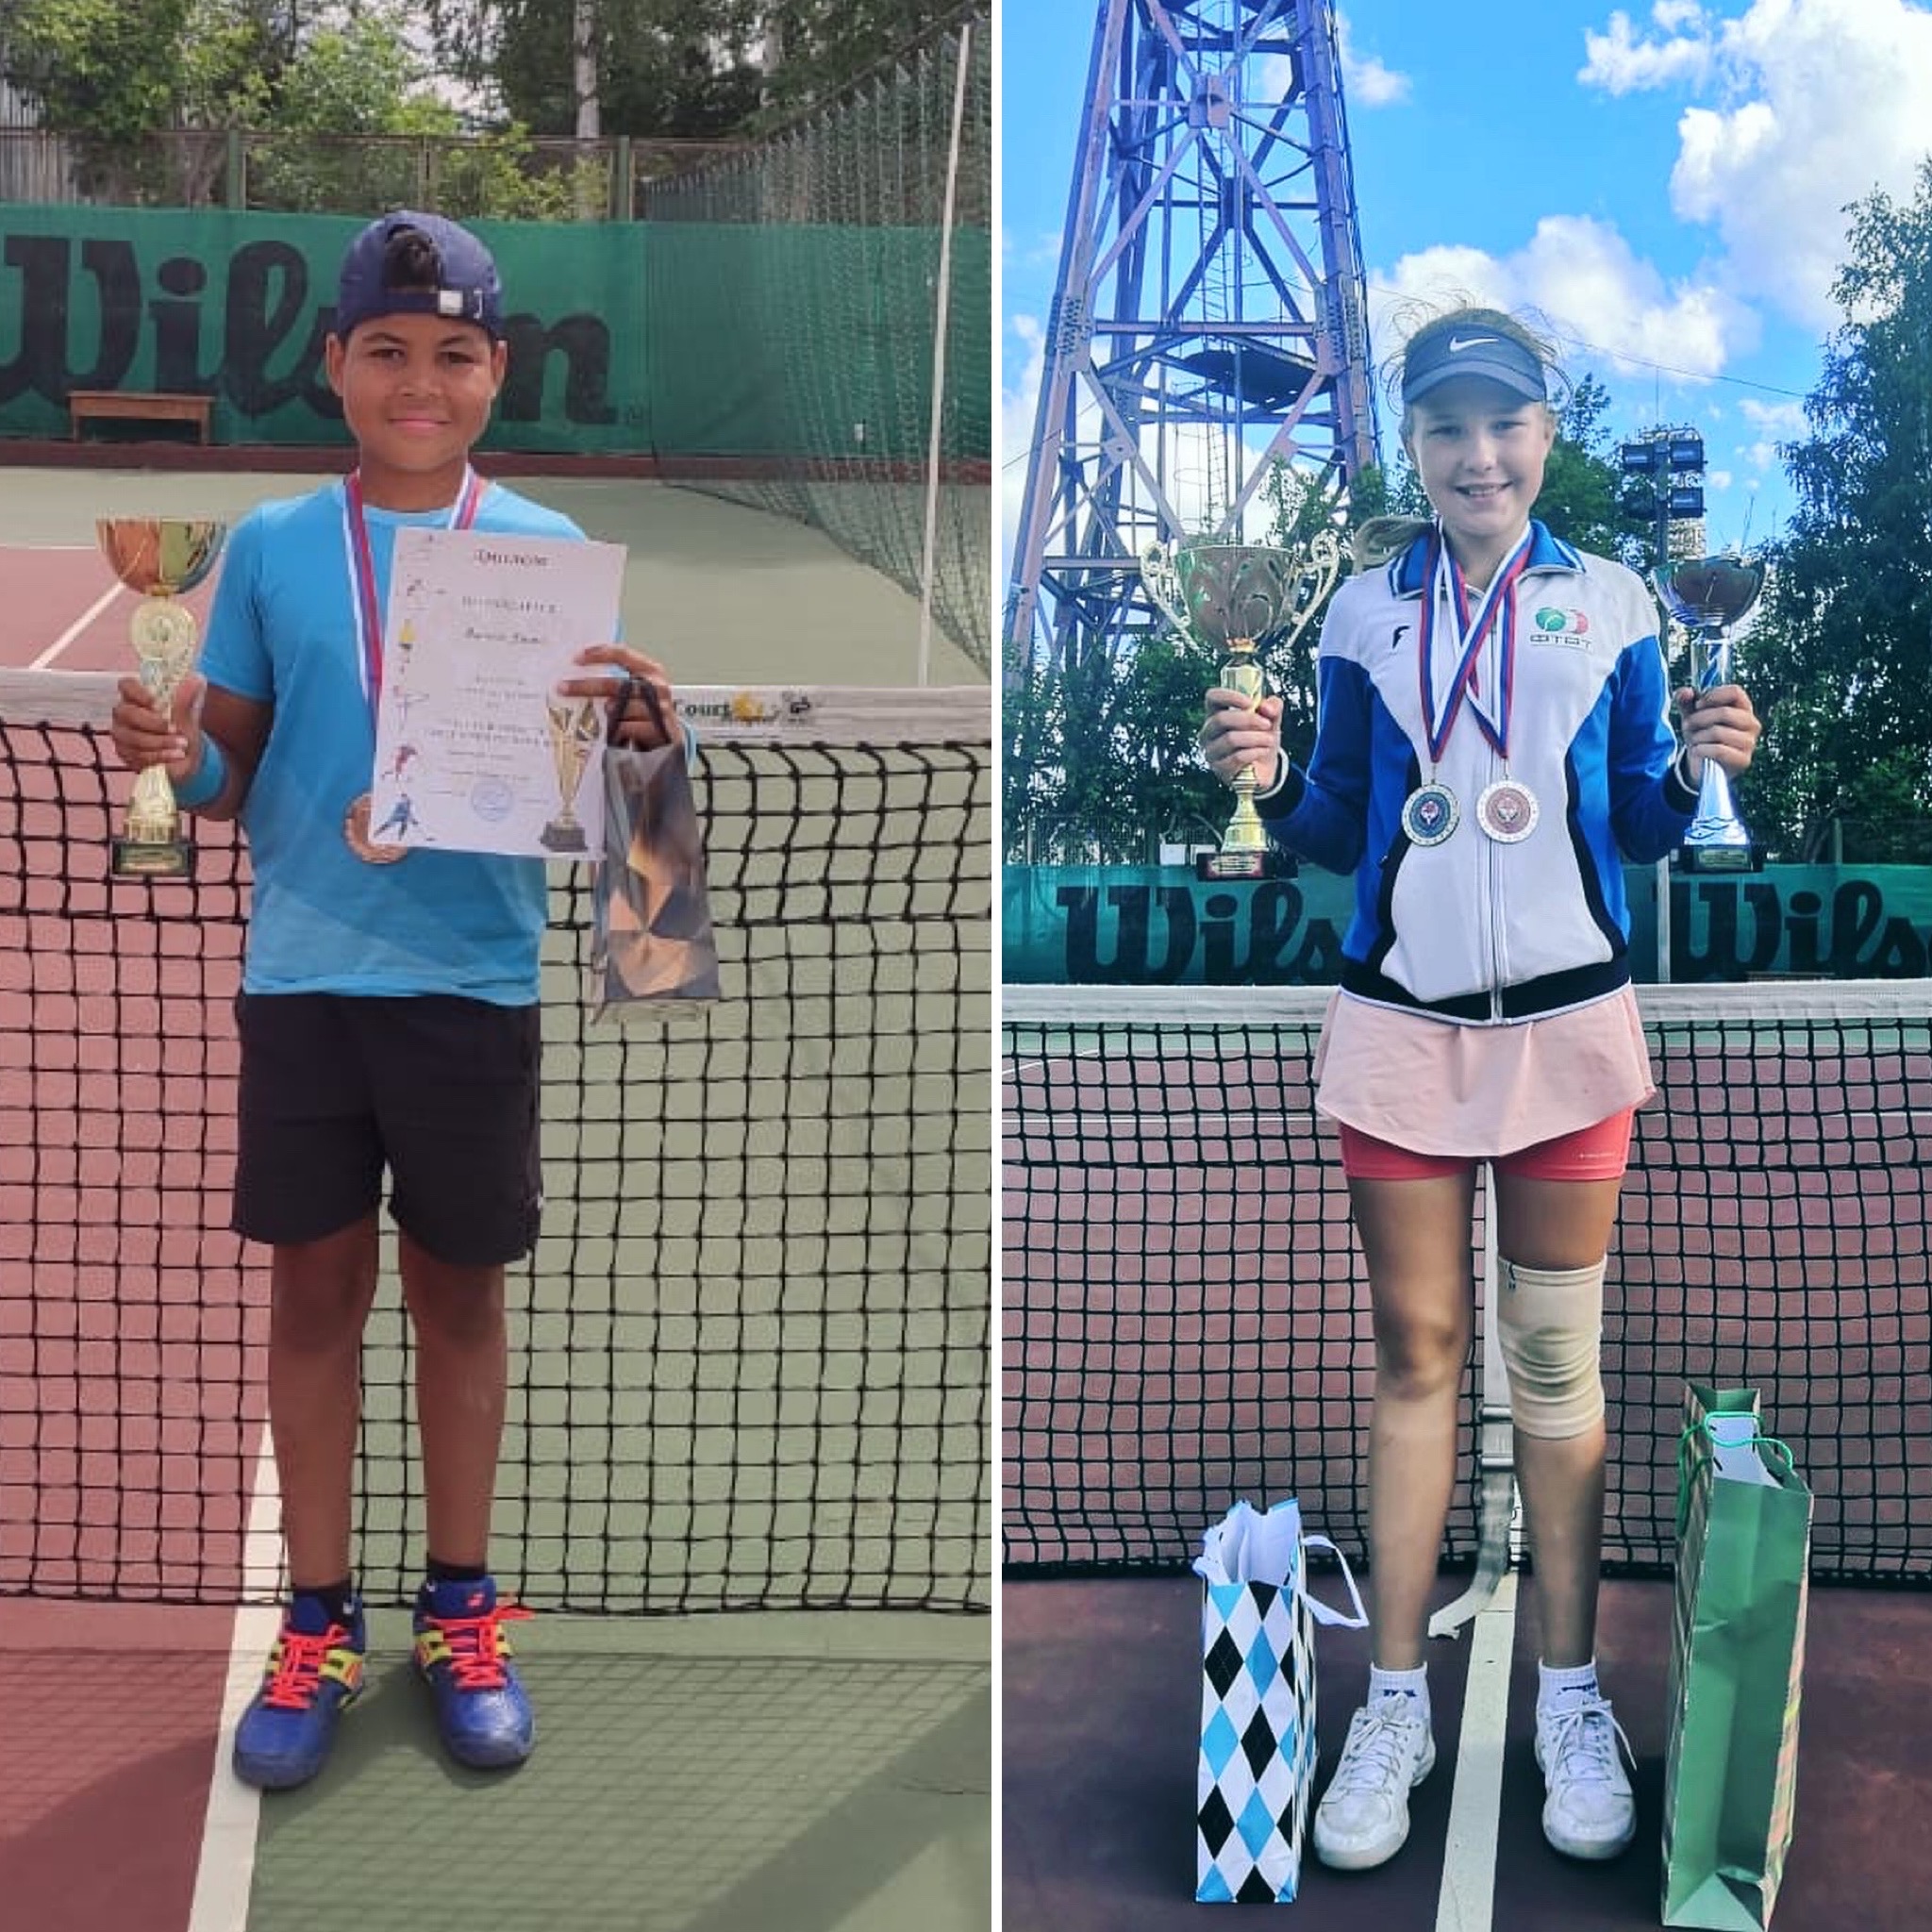 Тутулина Виталина и Валеев Дэвид  завоевали медали на турнире РТТ в Ижевске